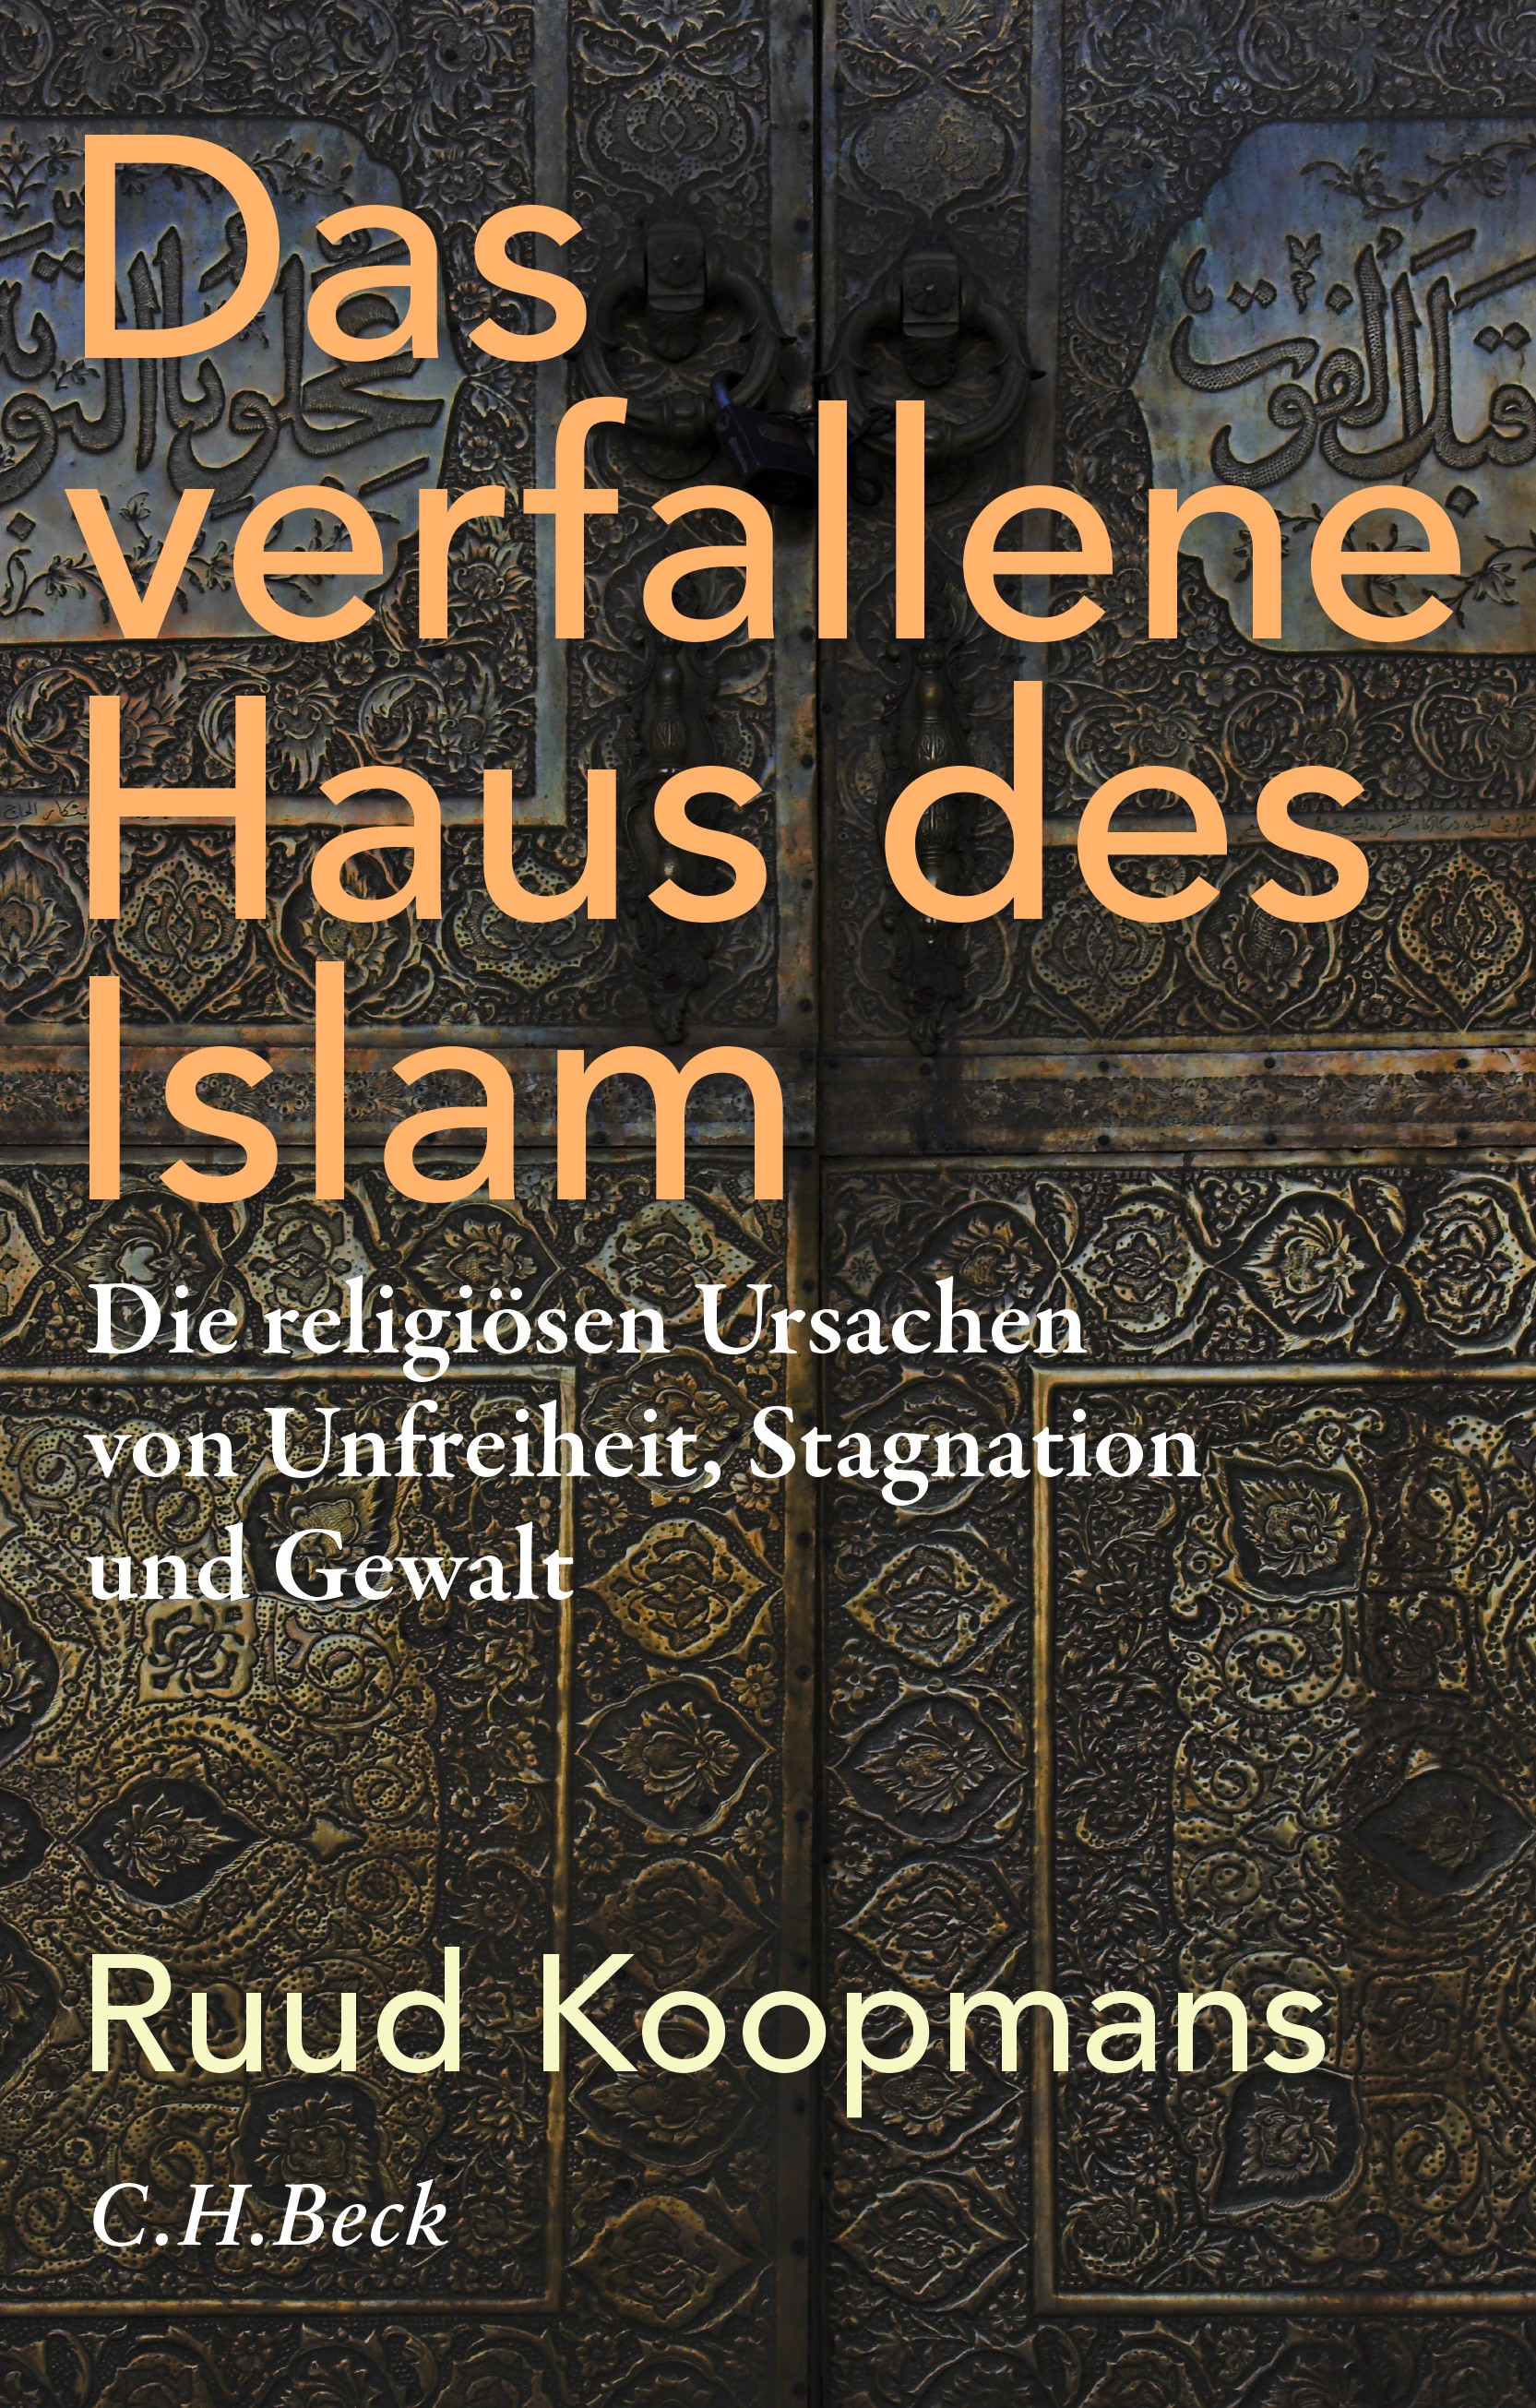 Buchcover Ruud Koopmans: "Das verfallene Haus des Islam" im Verlag C.H. Beck